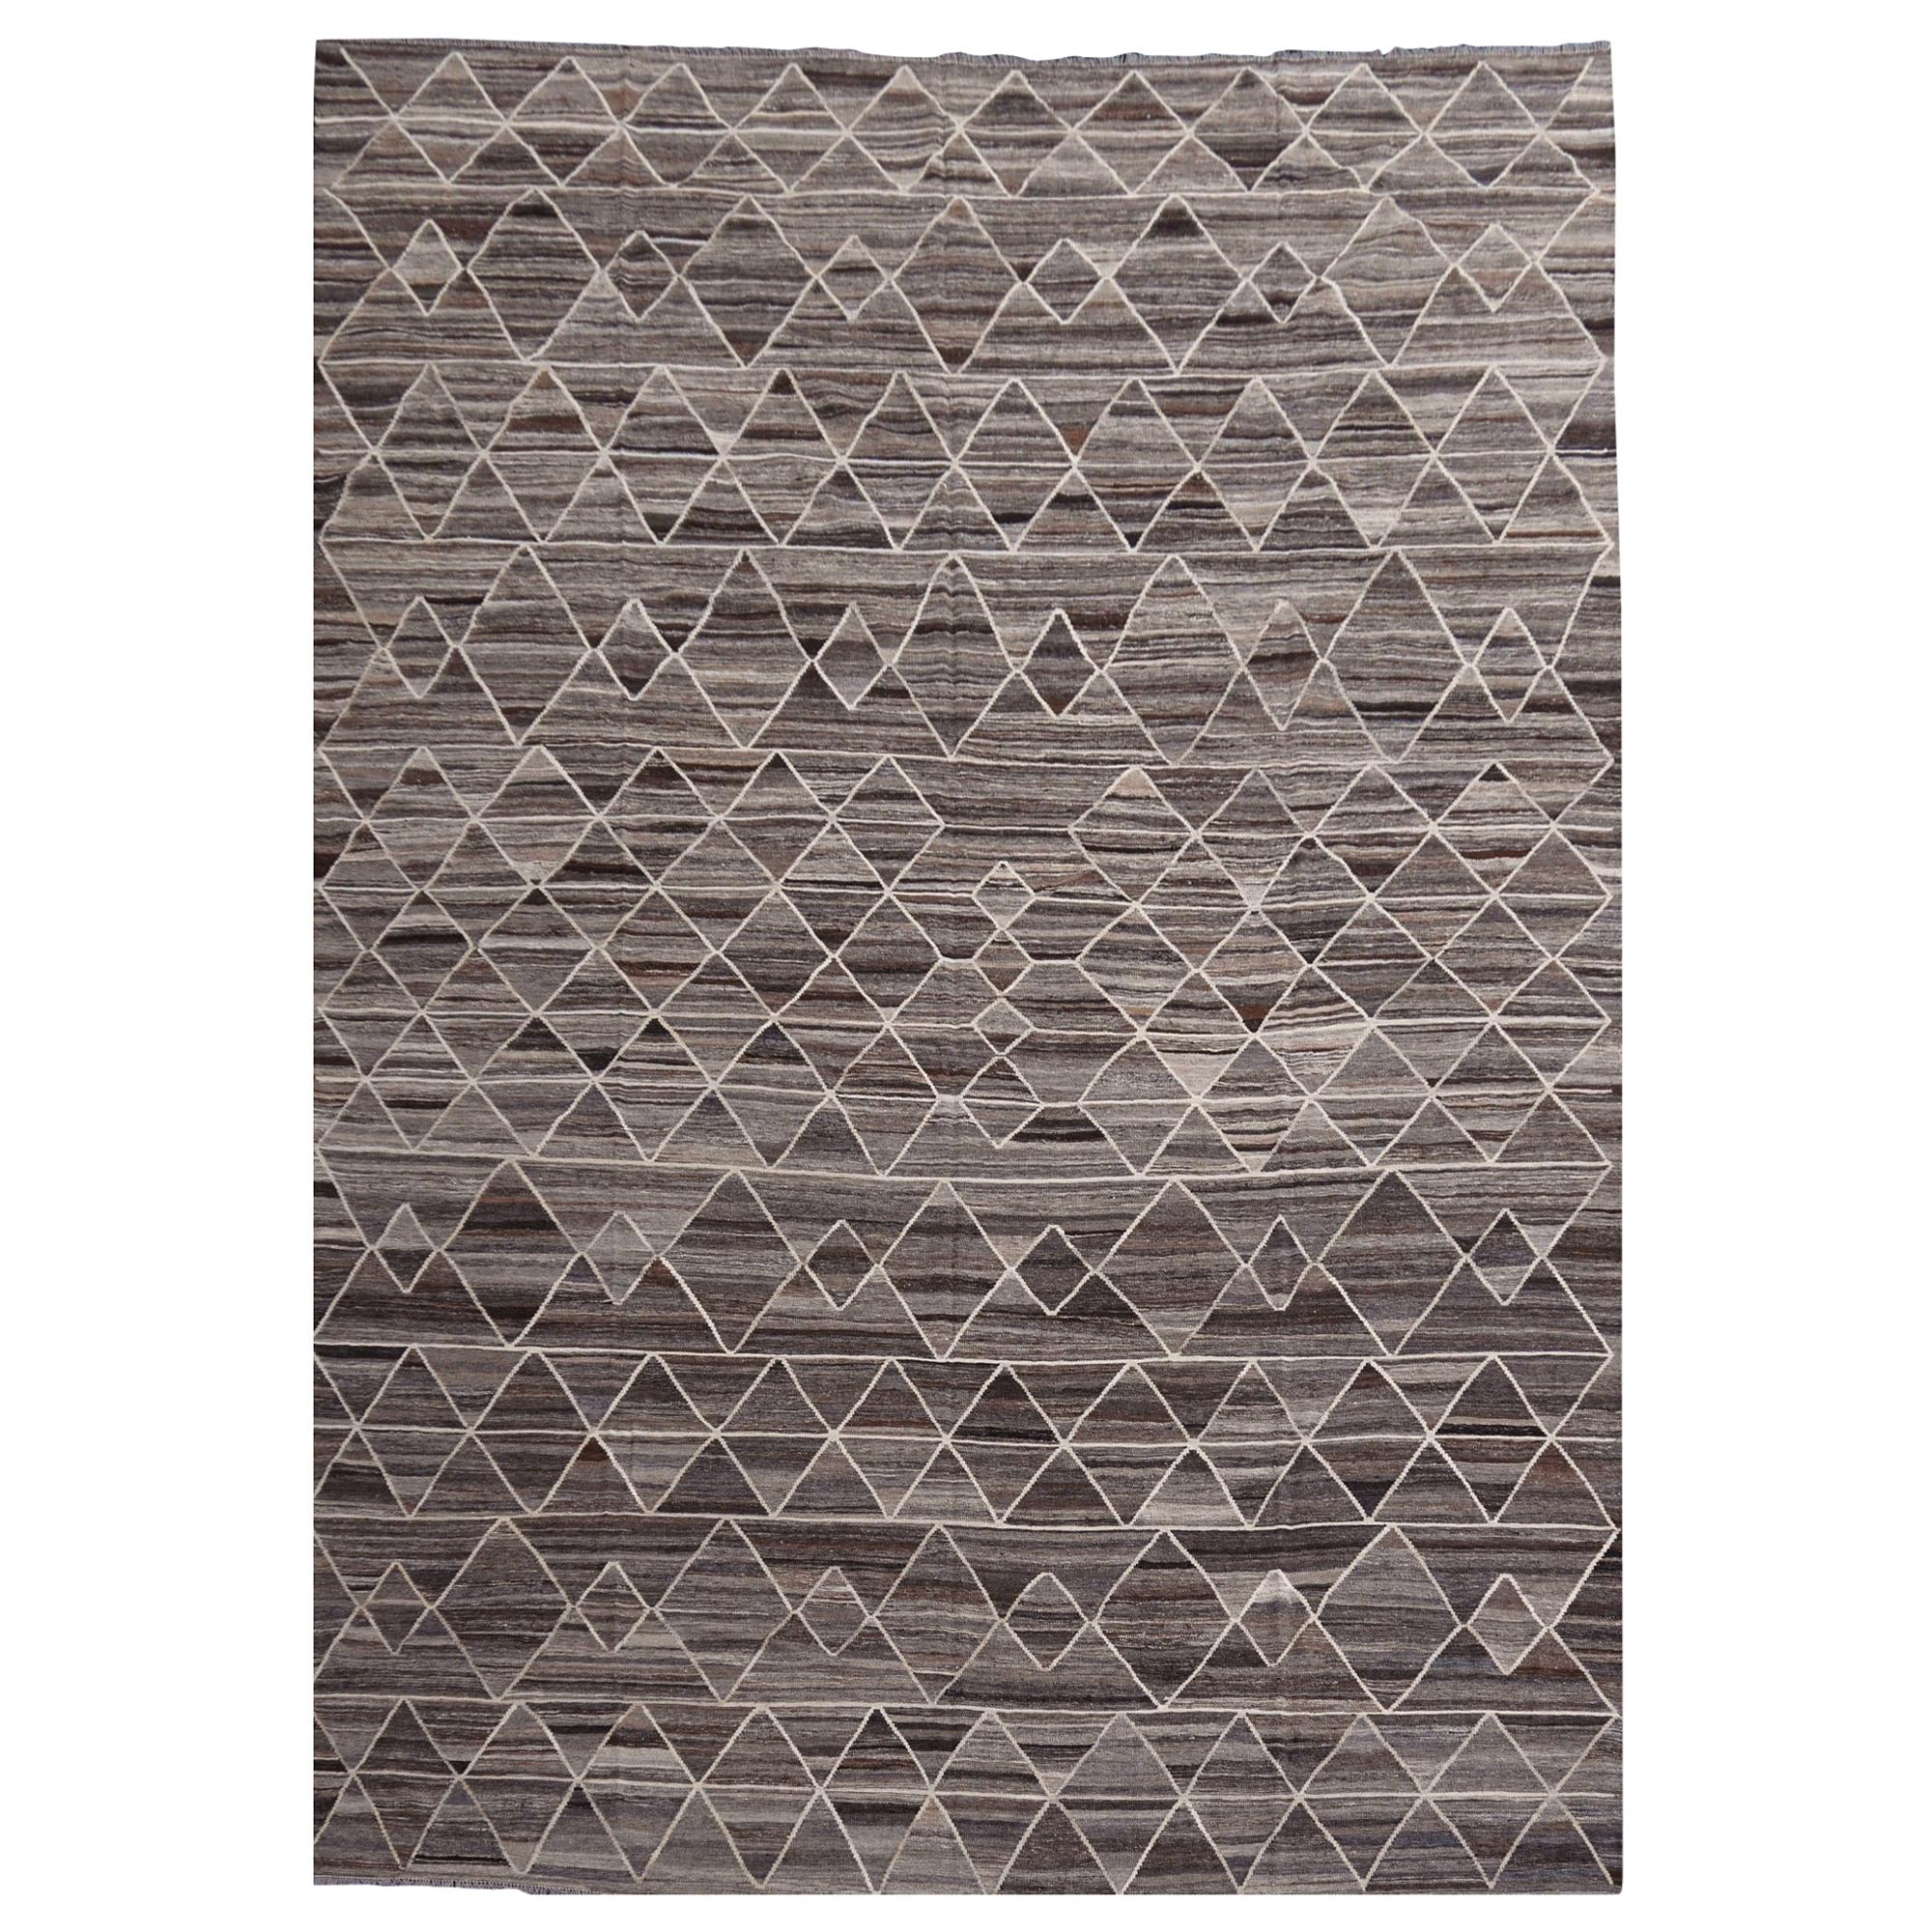 17 x 12 ft Rug Kilim Modern Design Neutrals Gray Brown Scandinavian Style Carpet For Sale